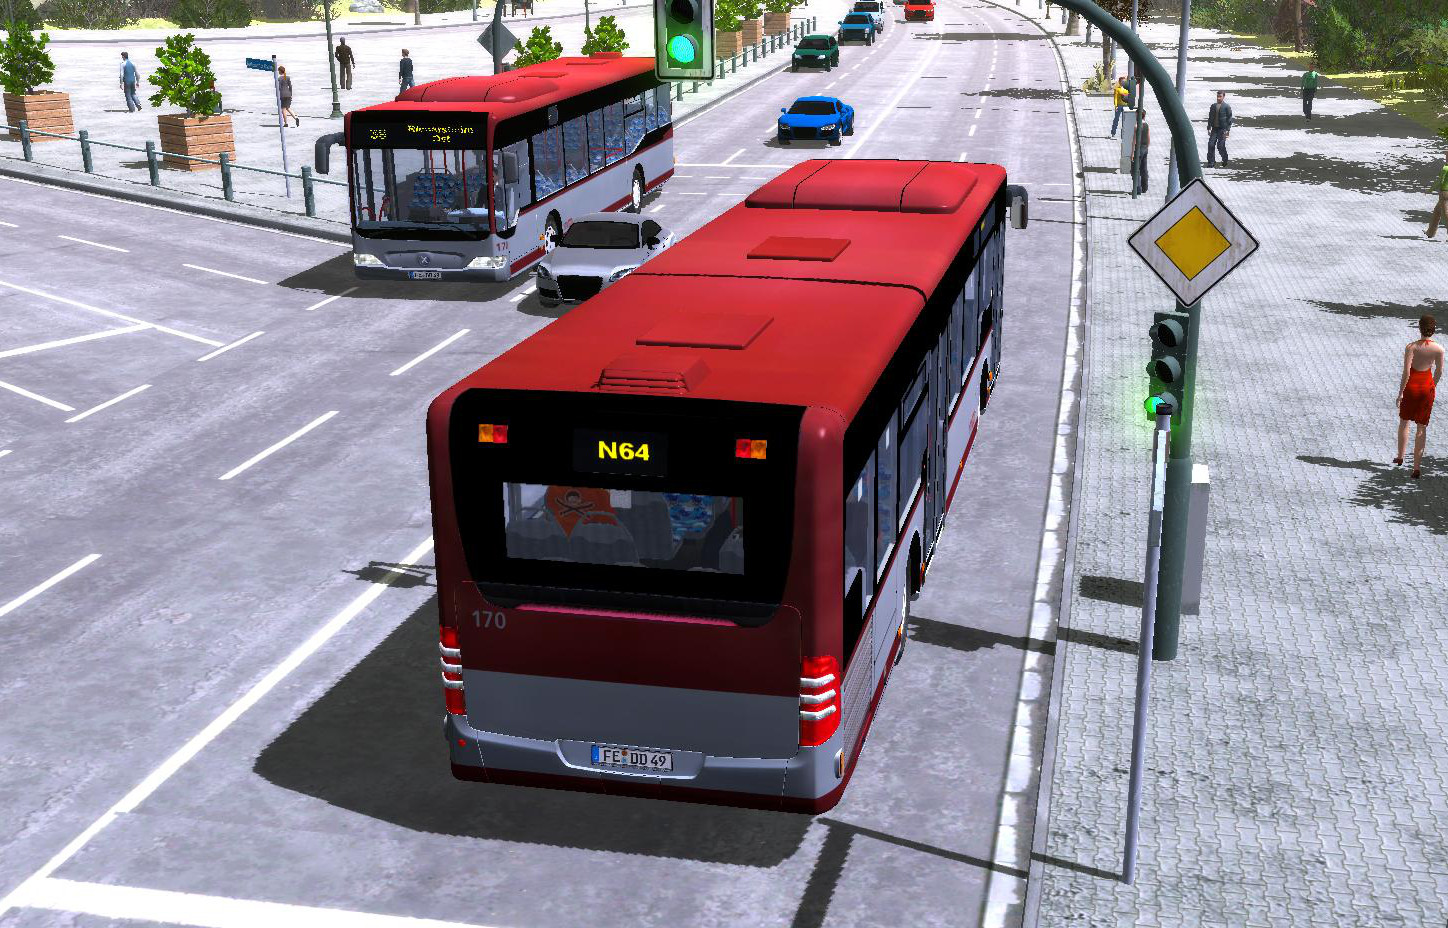 Bus Simulator Games